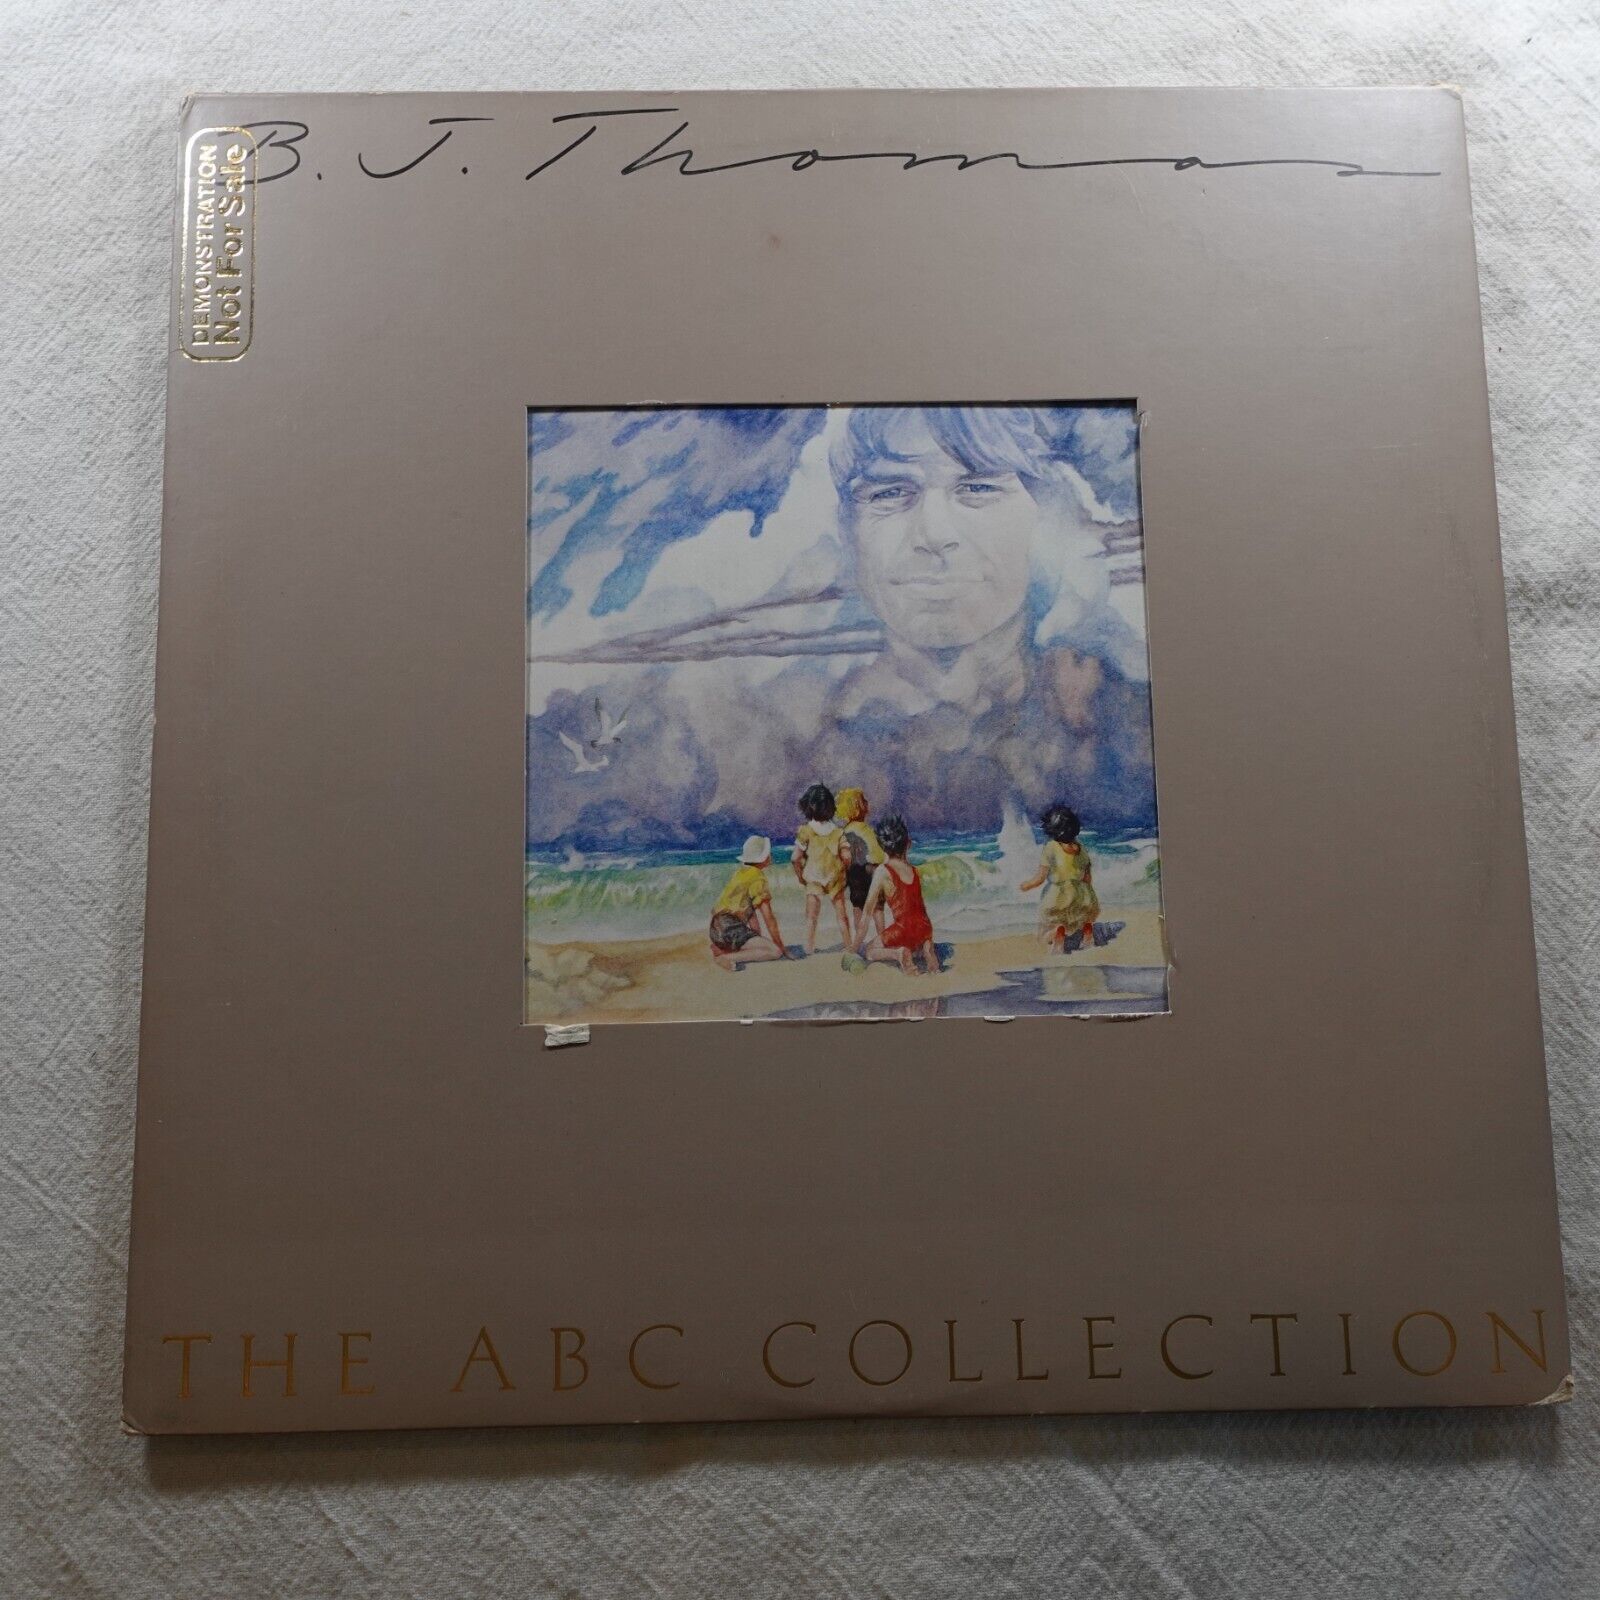 BJ Thomas The ABC Collection   Record Album Vinyl LP